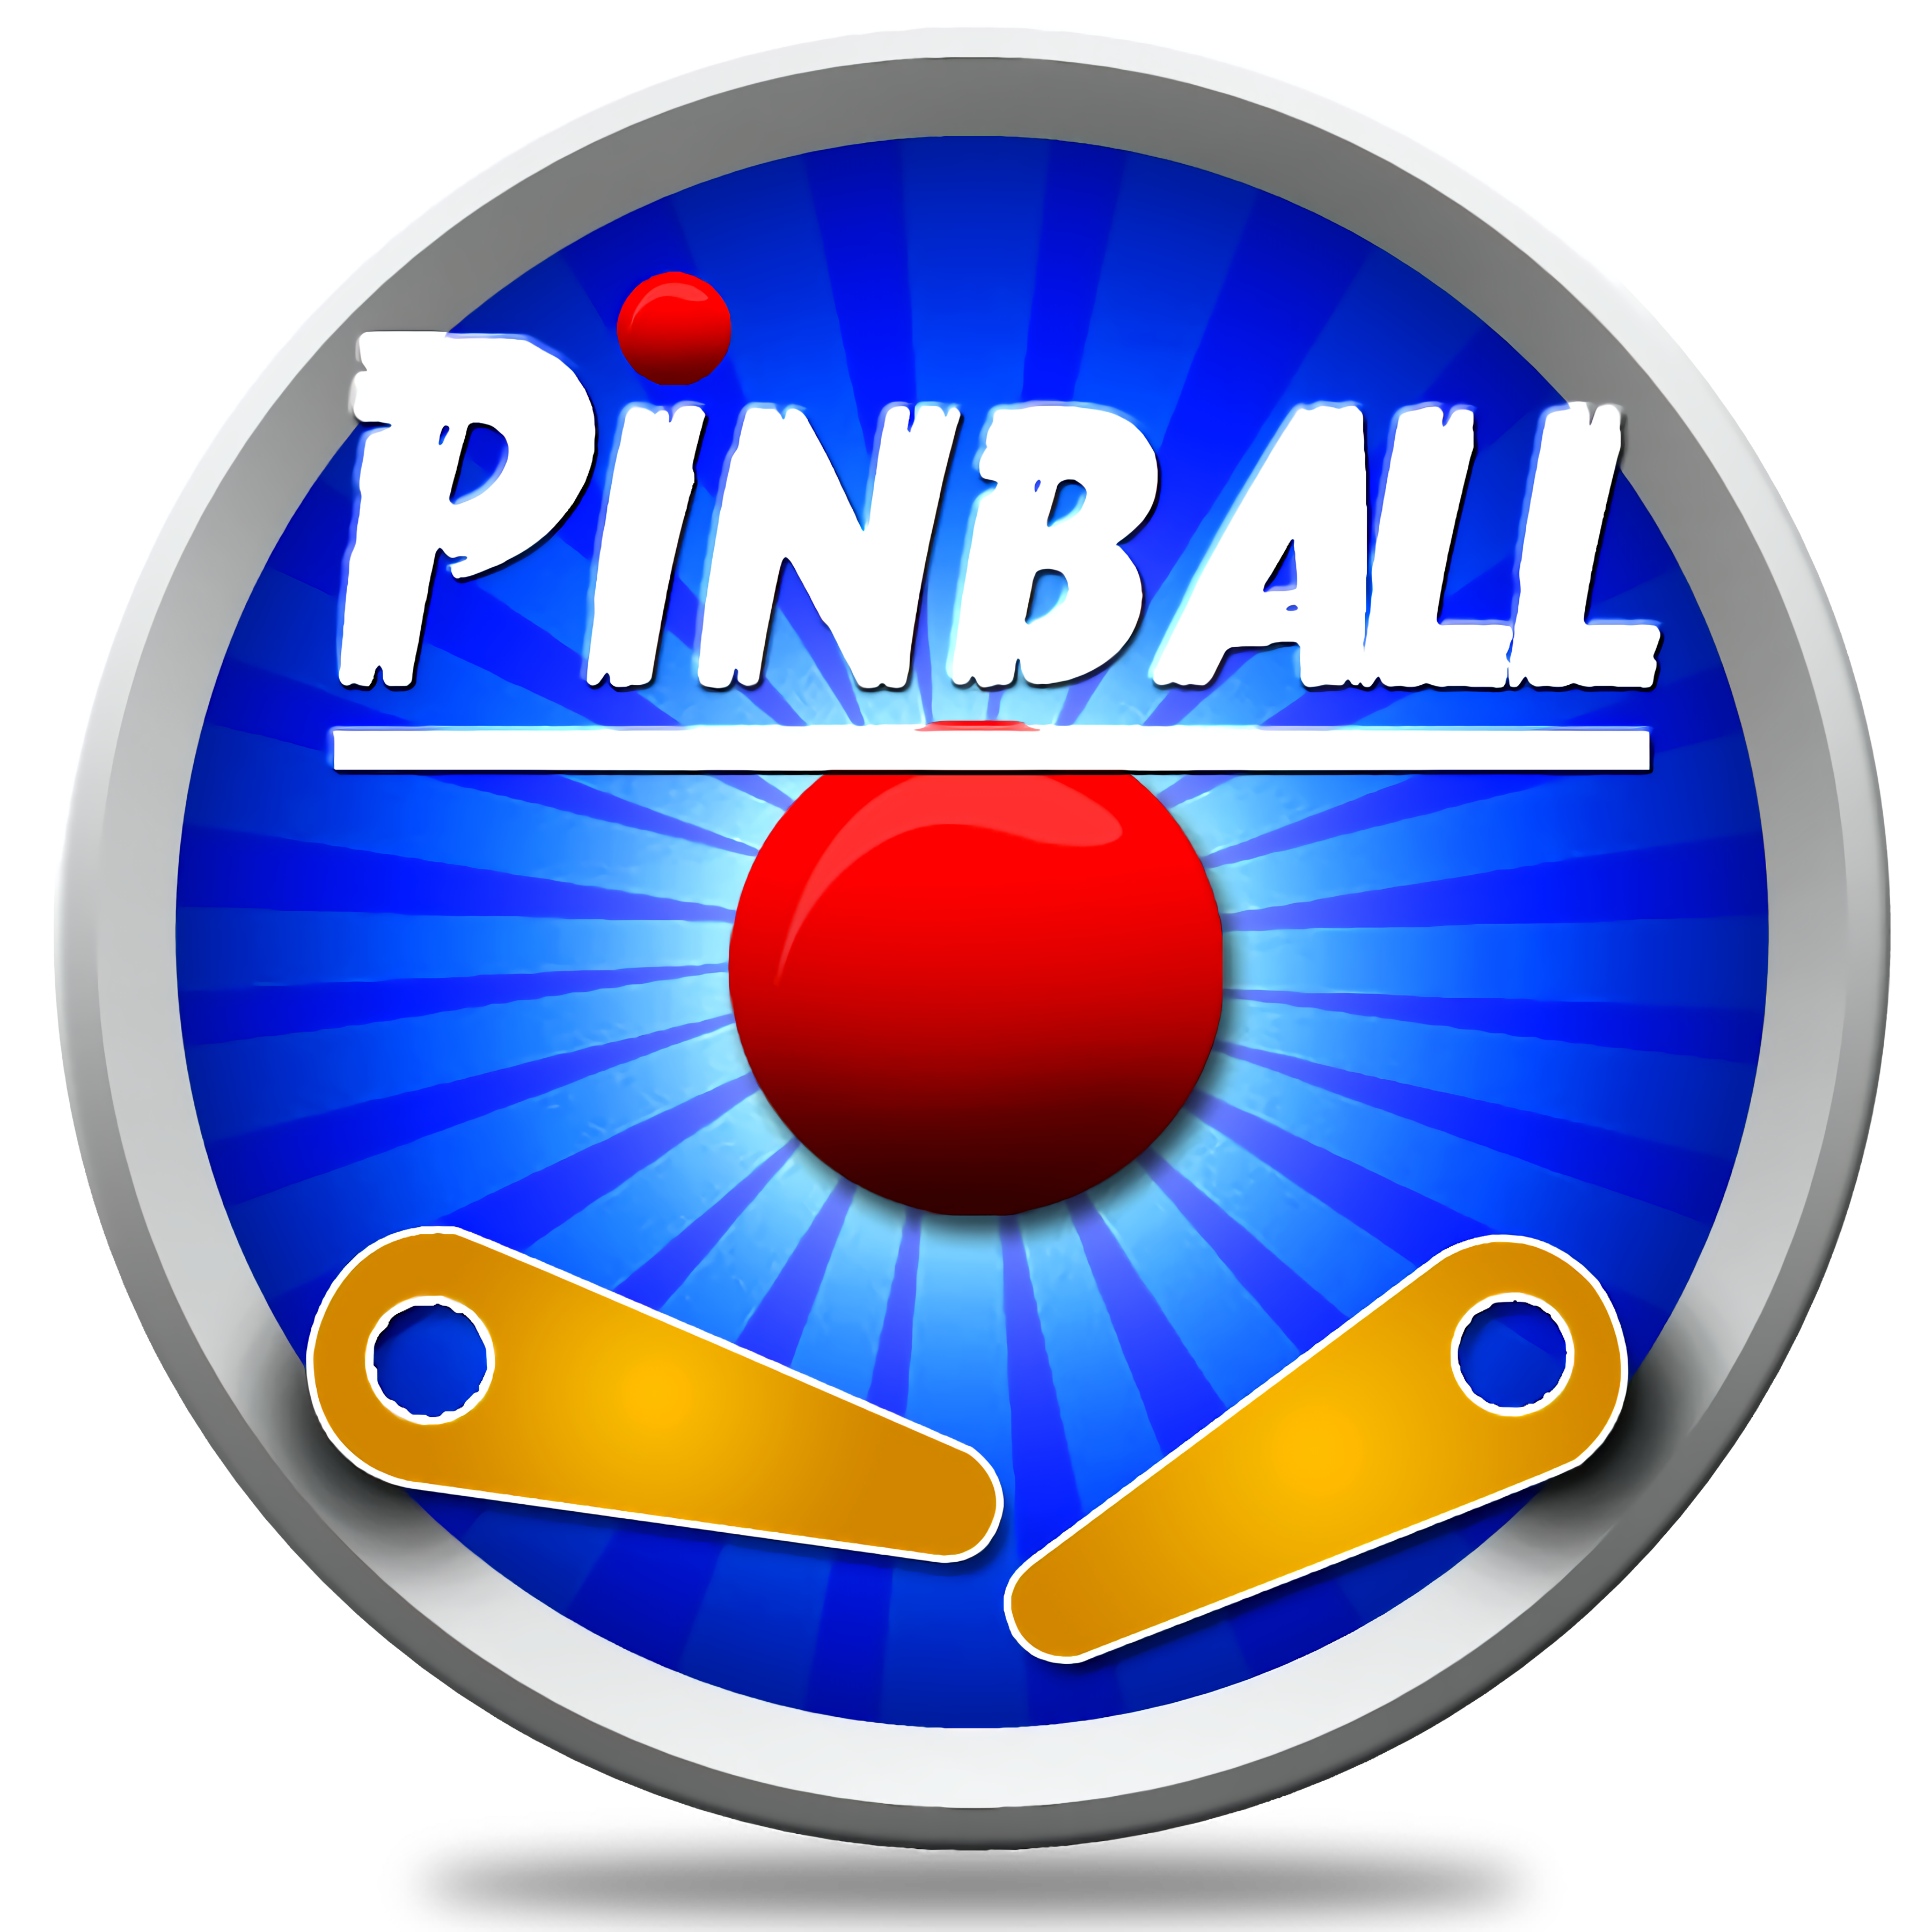 Pinball Games